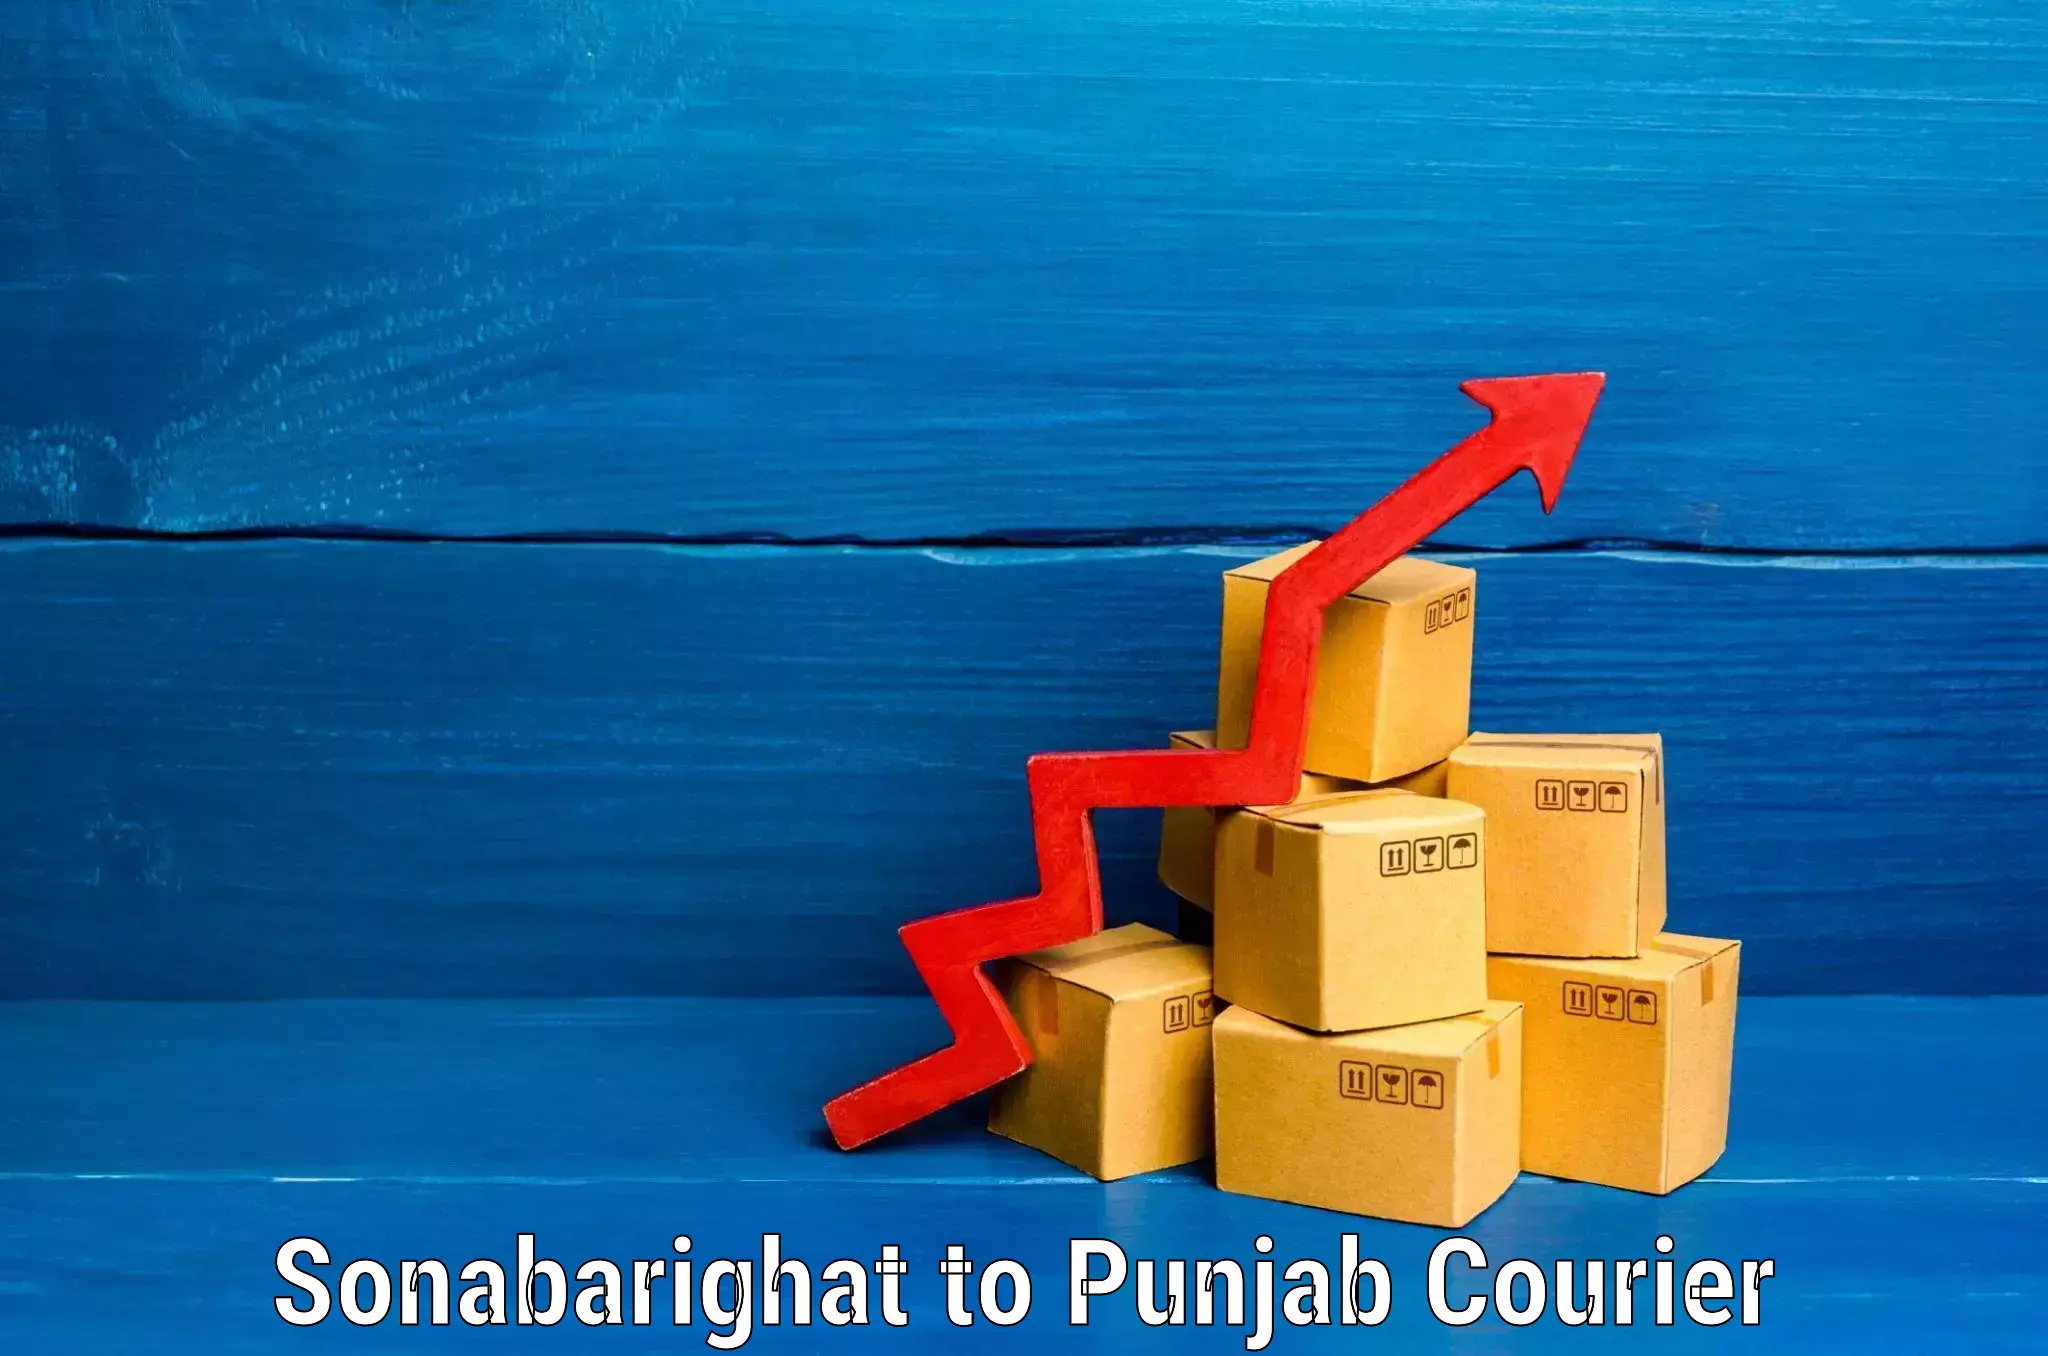 Baggage transport innovation Sonabarighat to Punjab